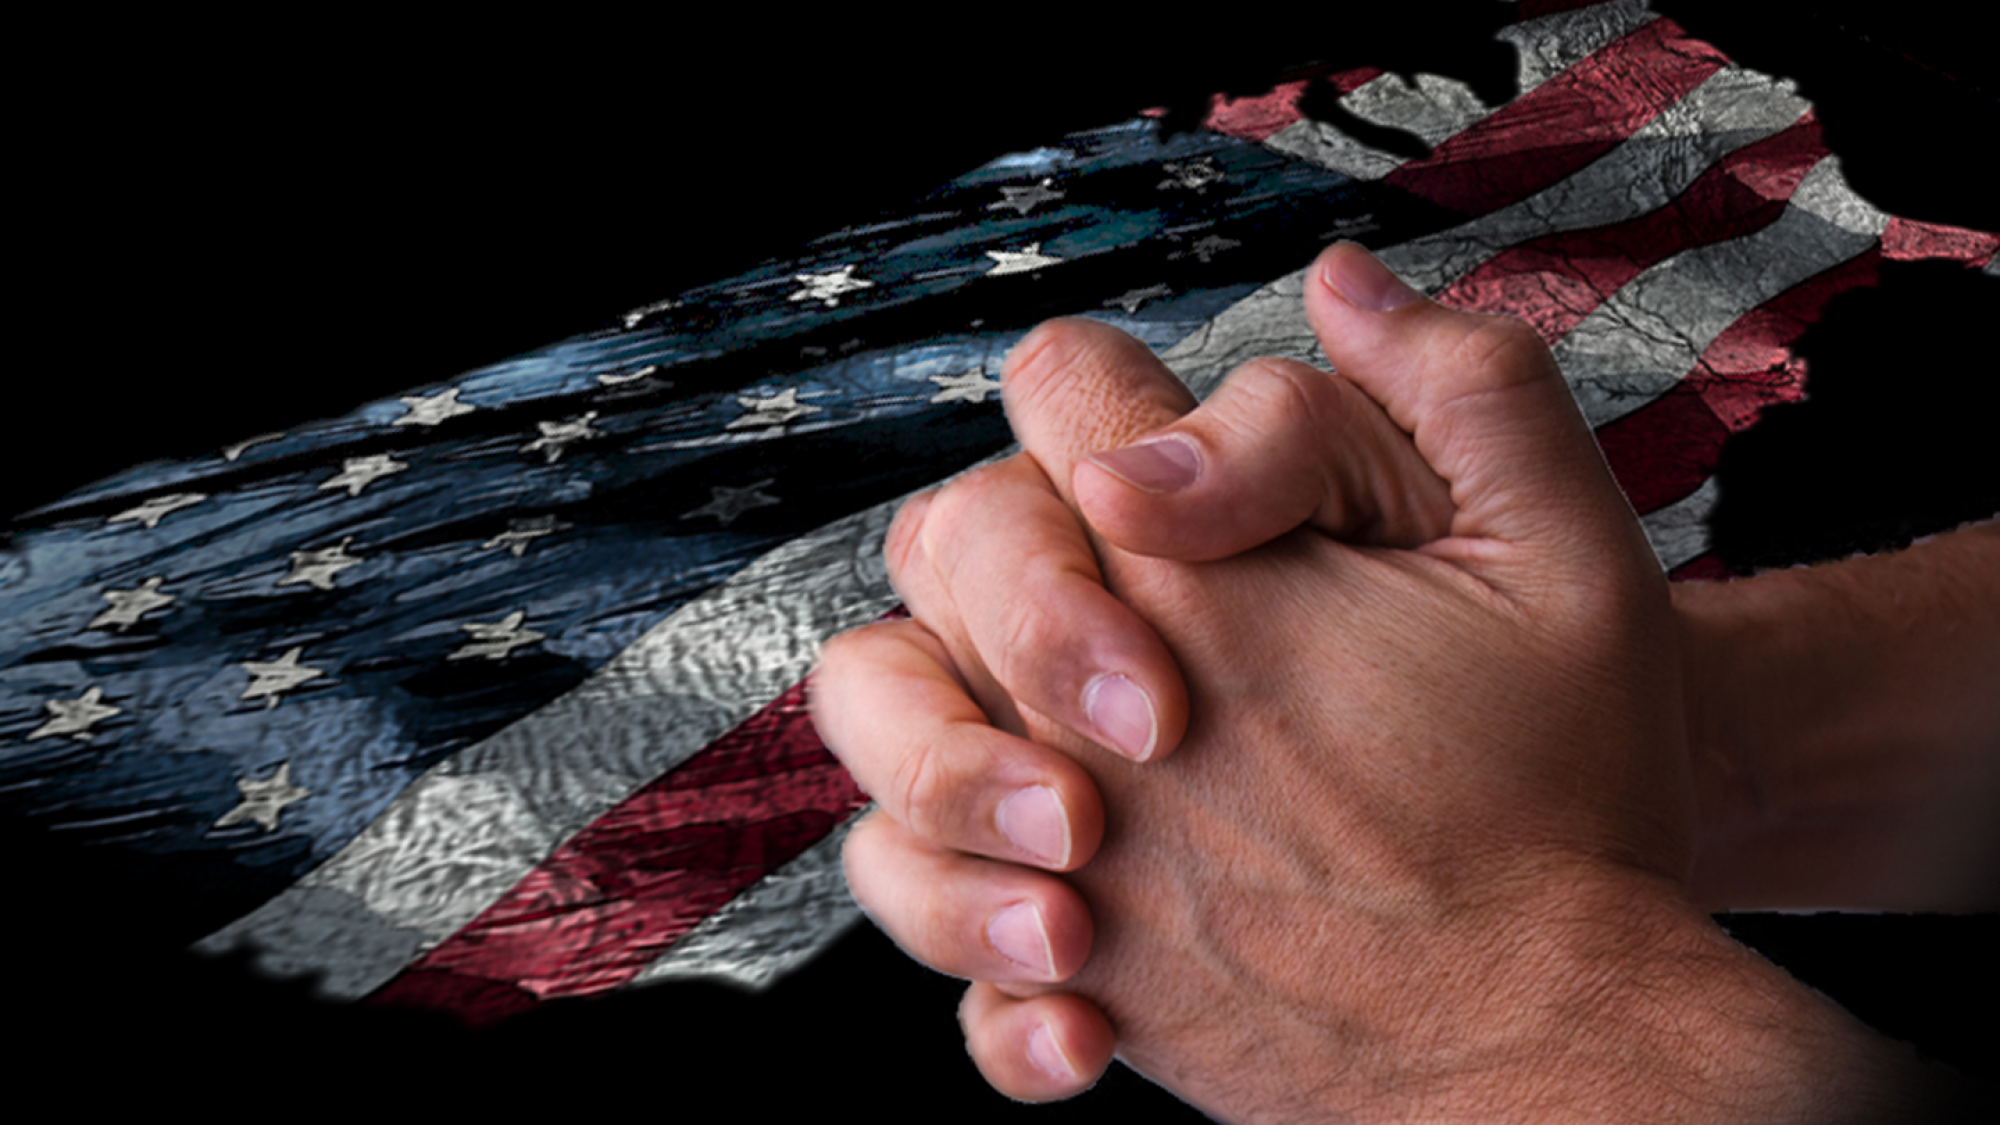 Man holding hands in prayer over USA flag background